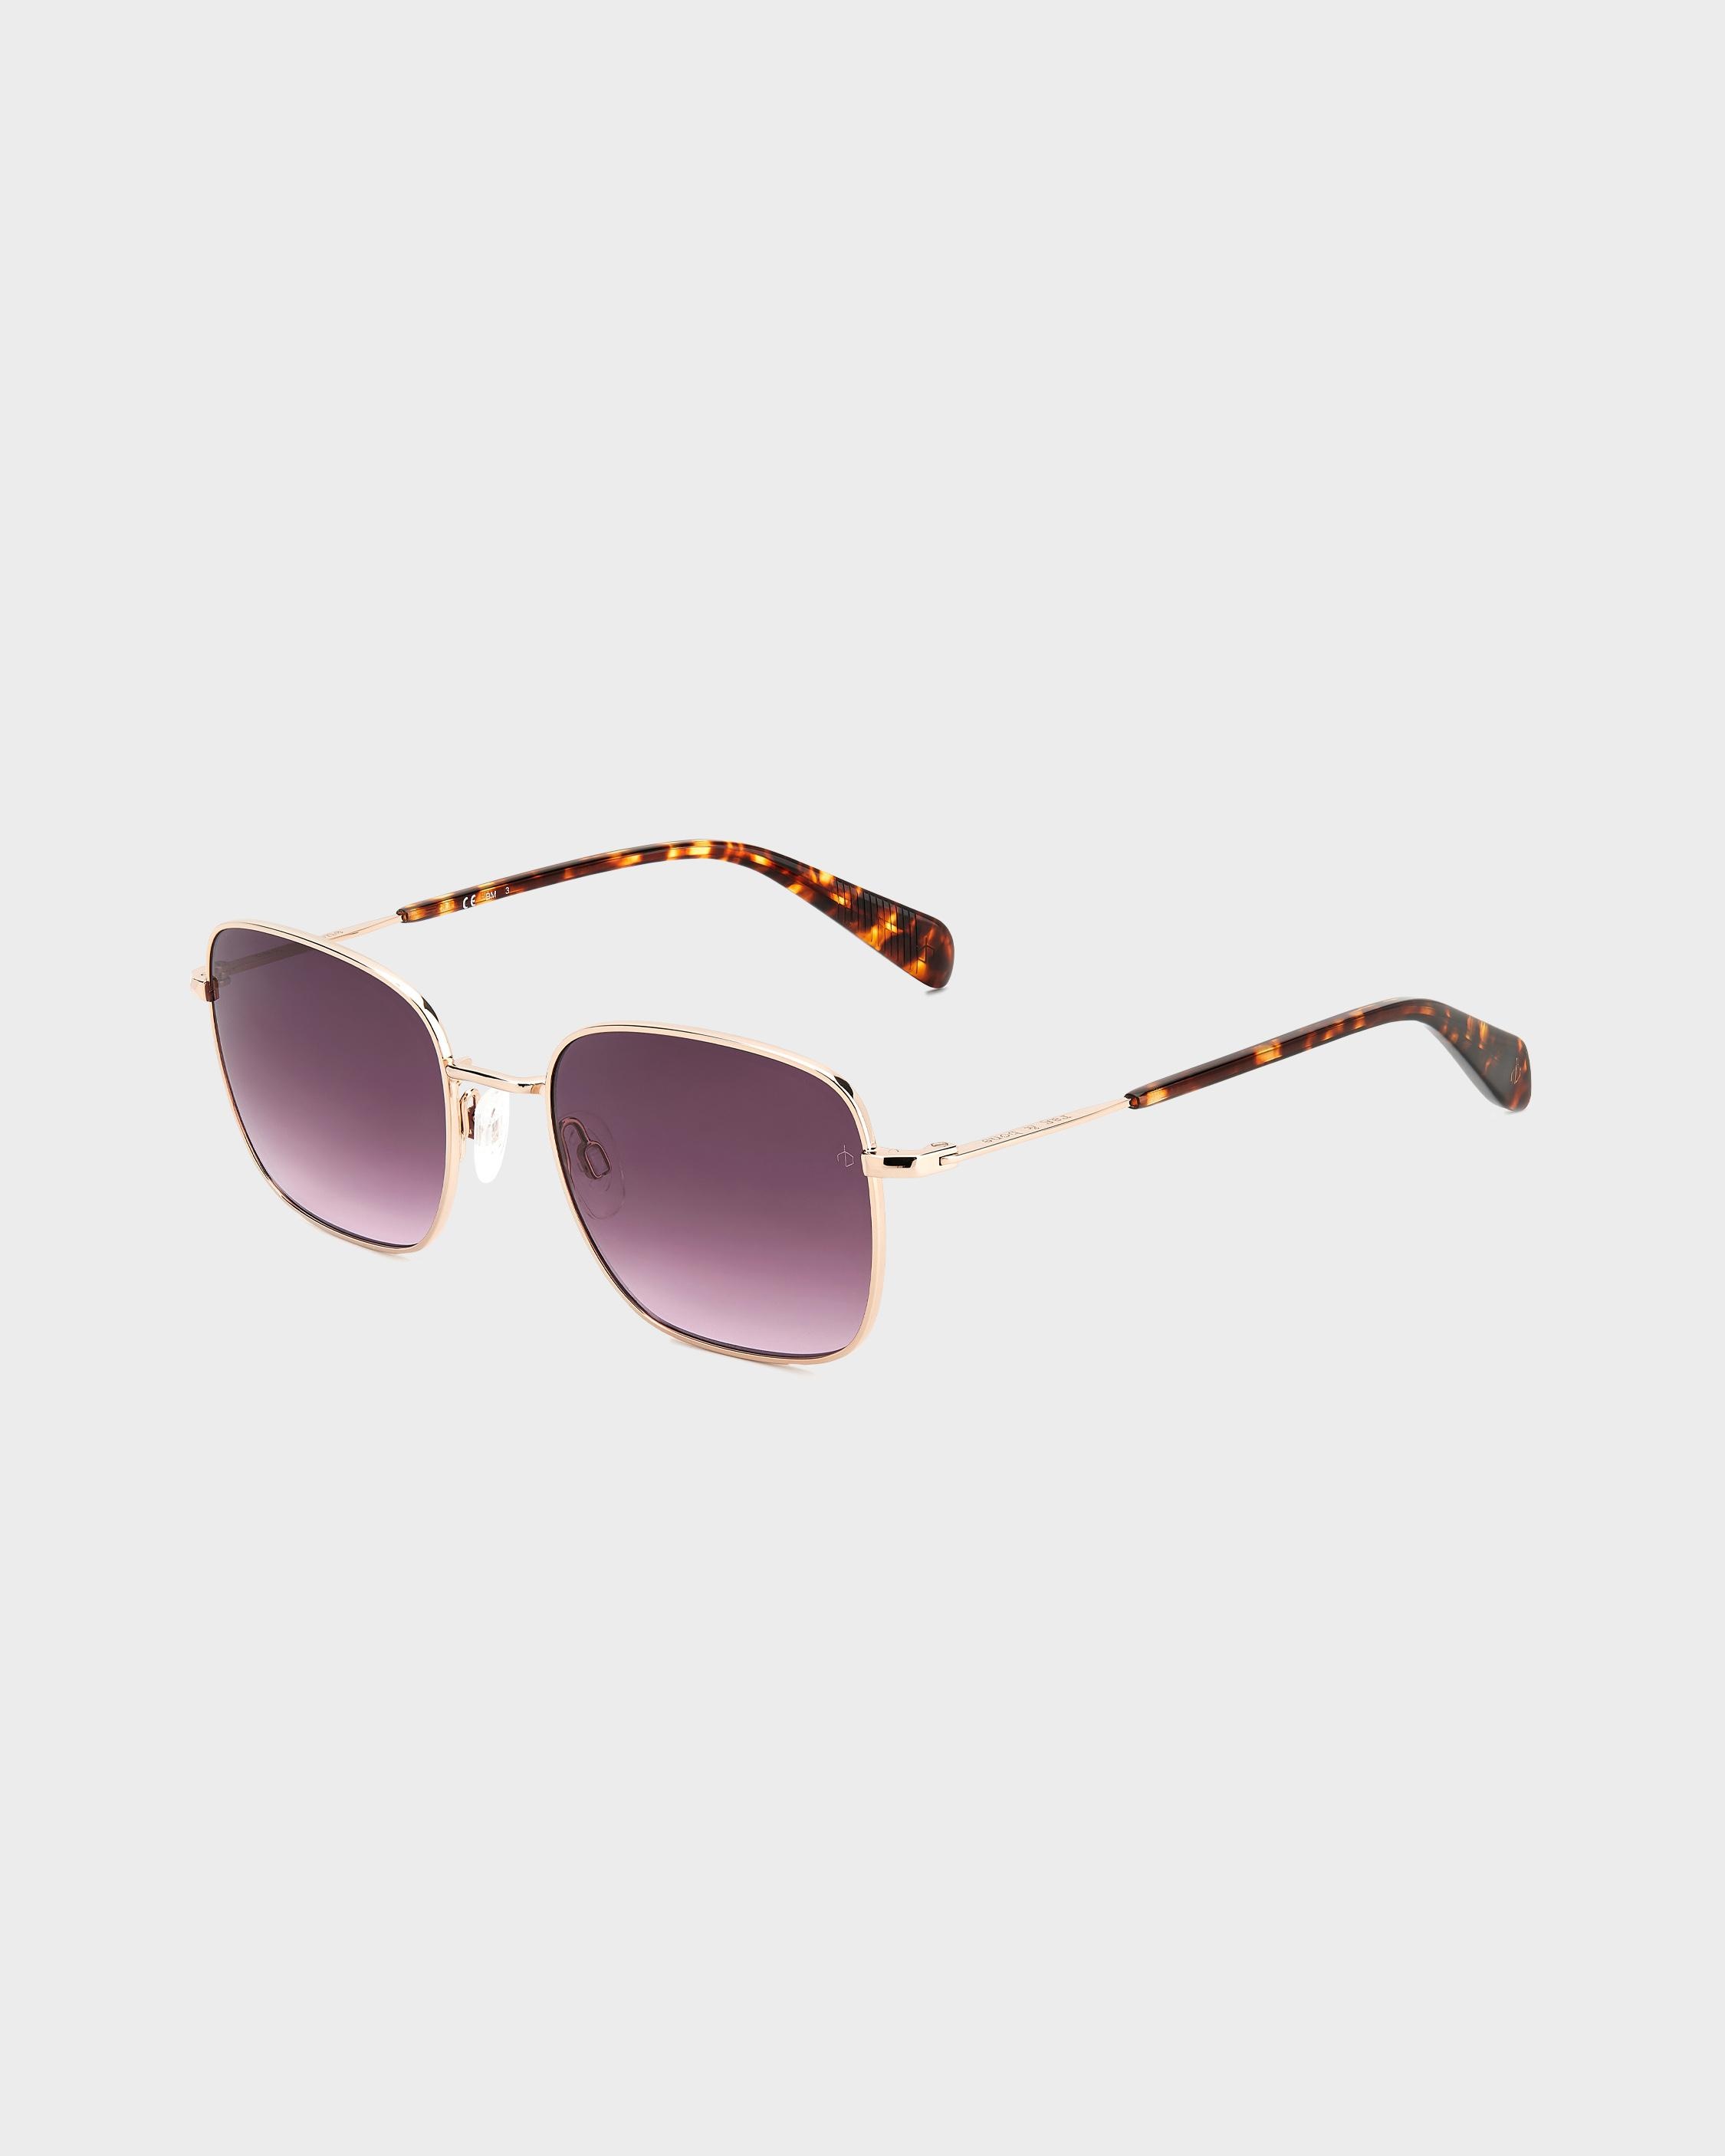 Breton
Square Sunglasses - 1